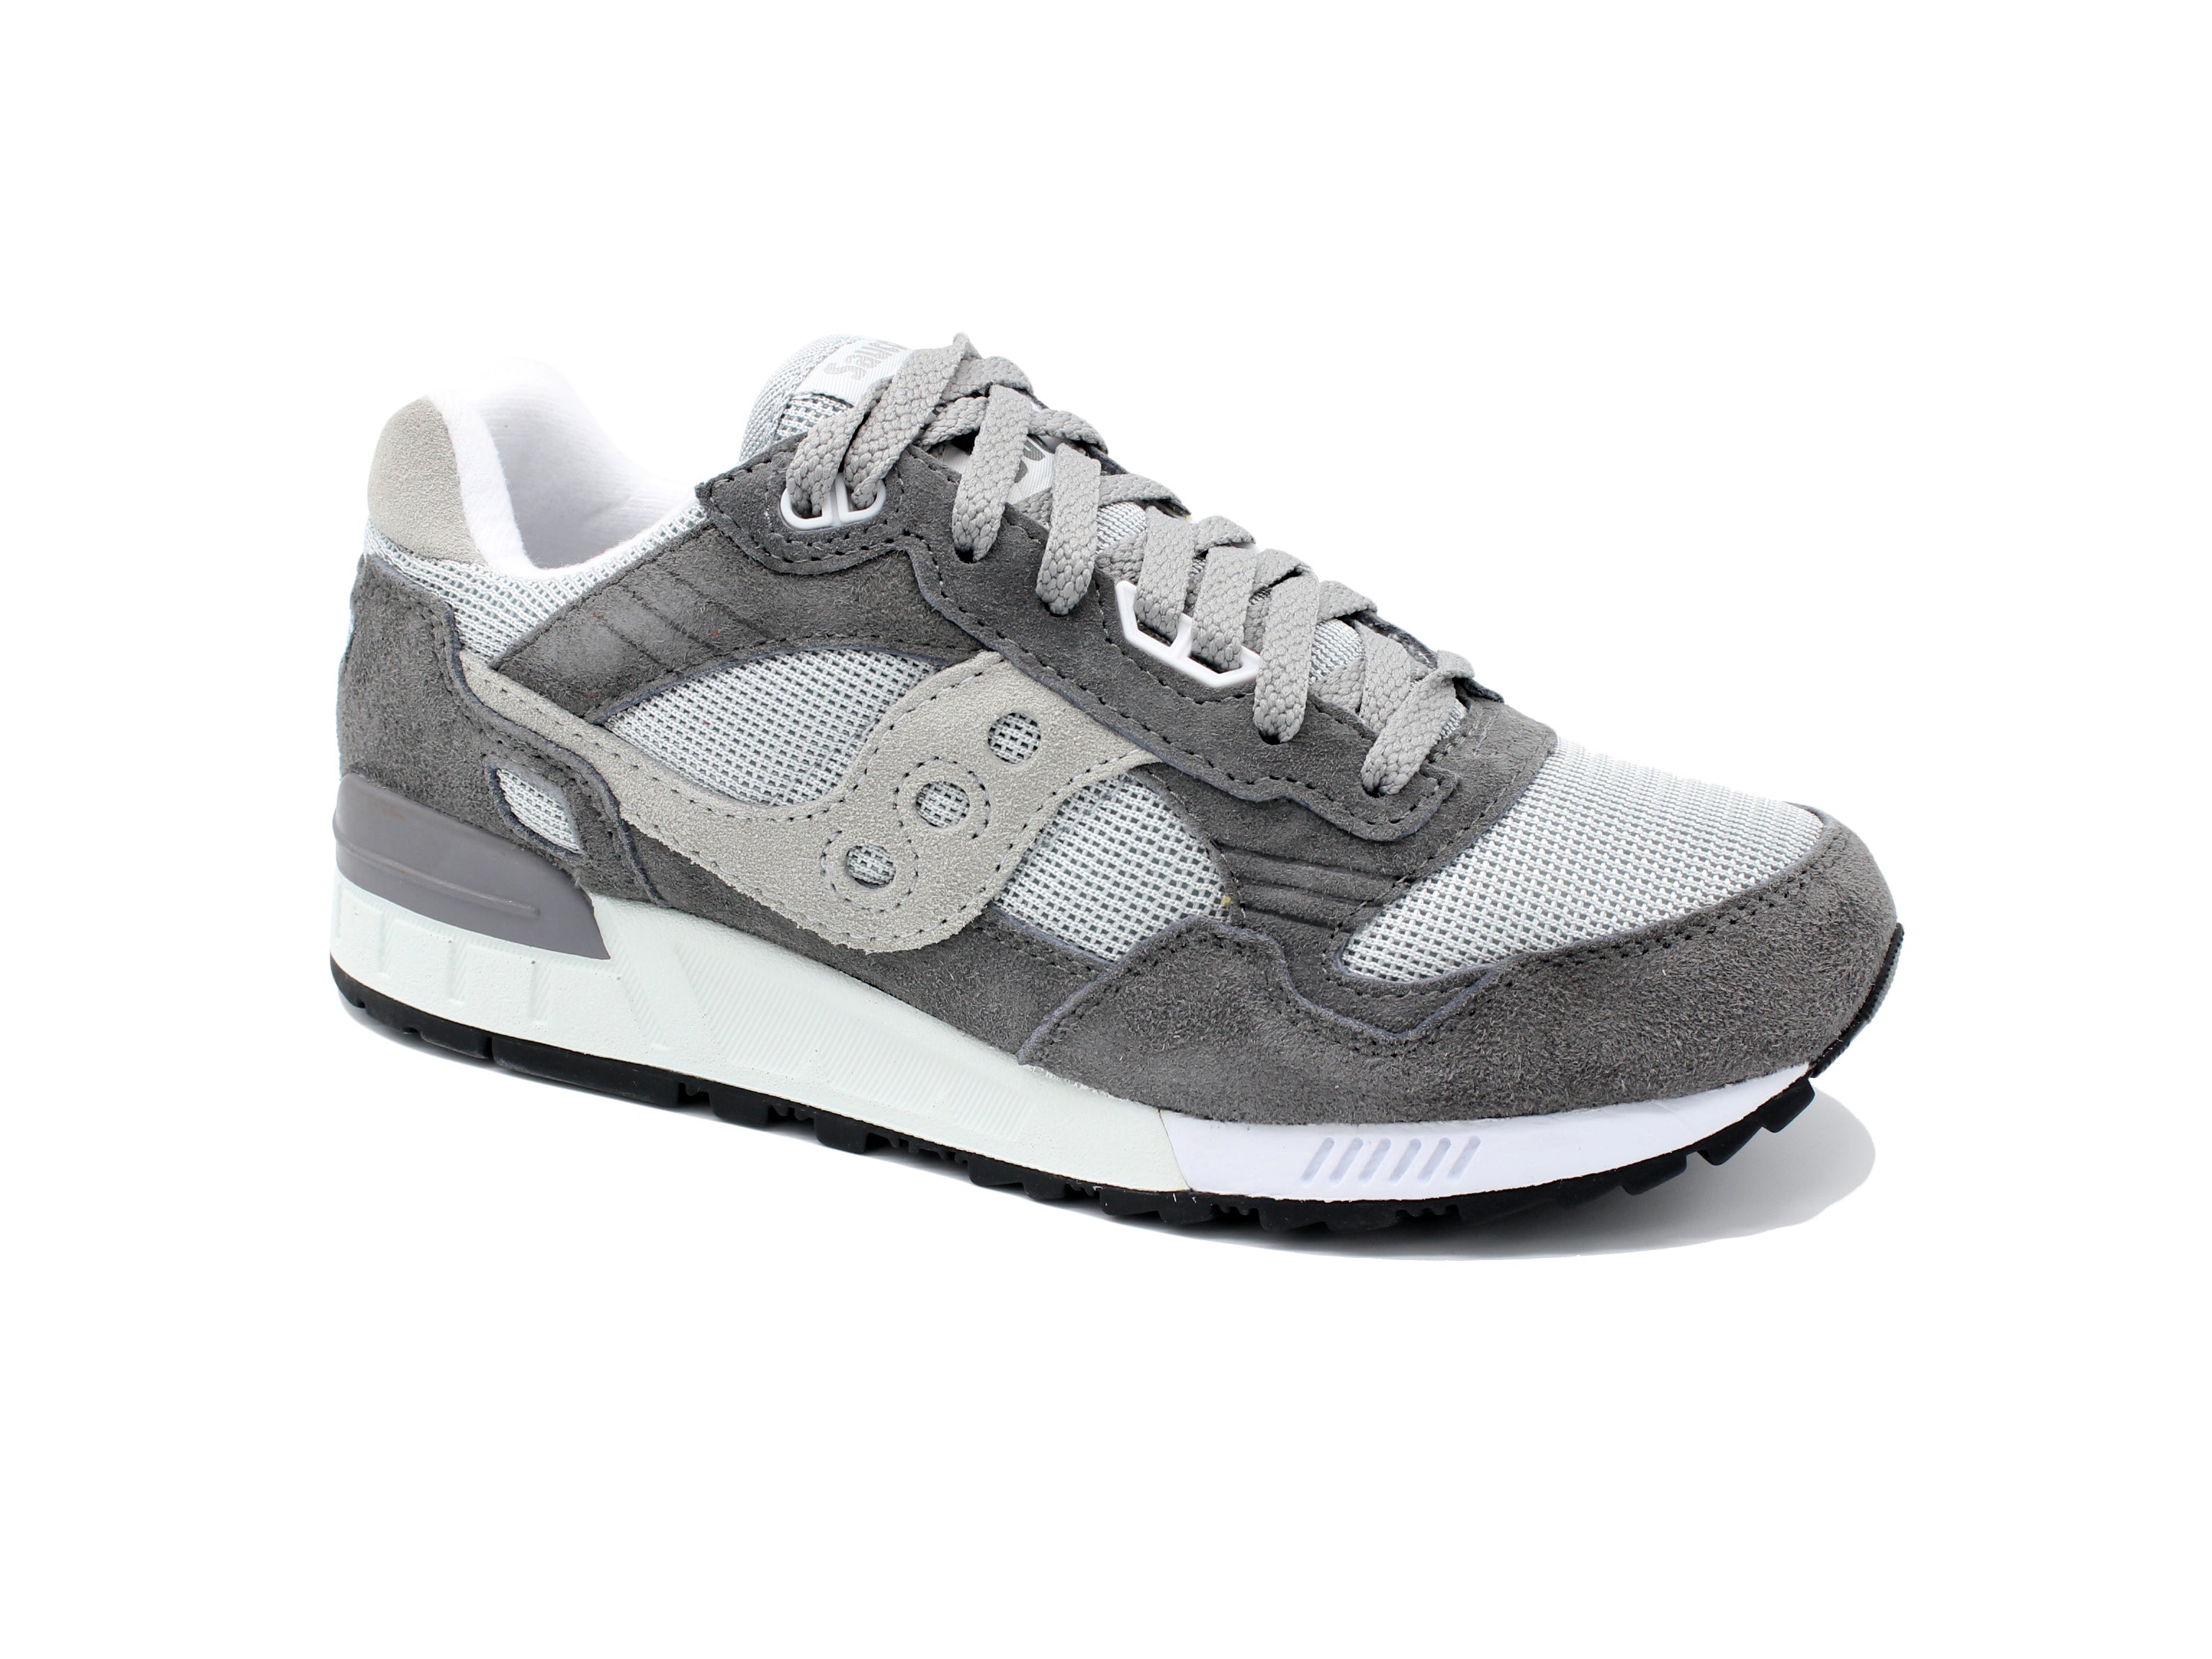 SHANOW 5000 S70665 gray sneaker